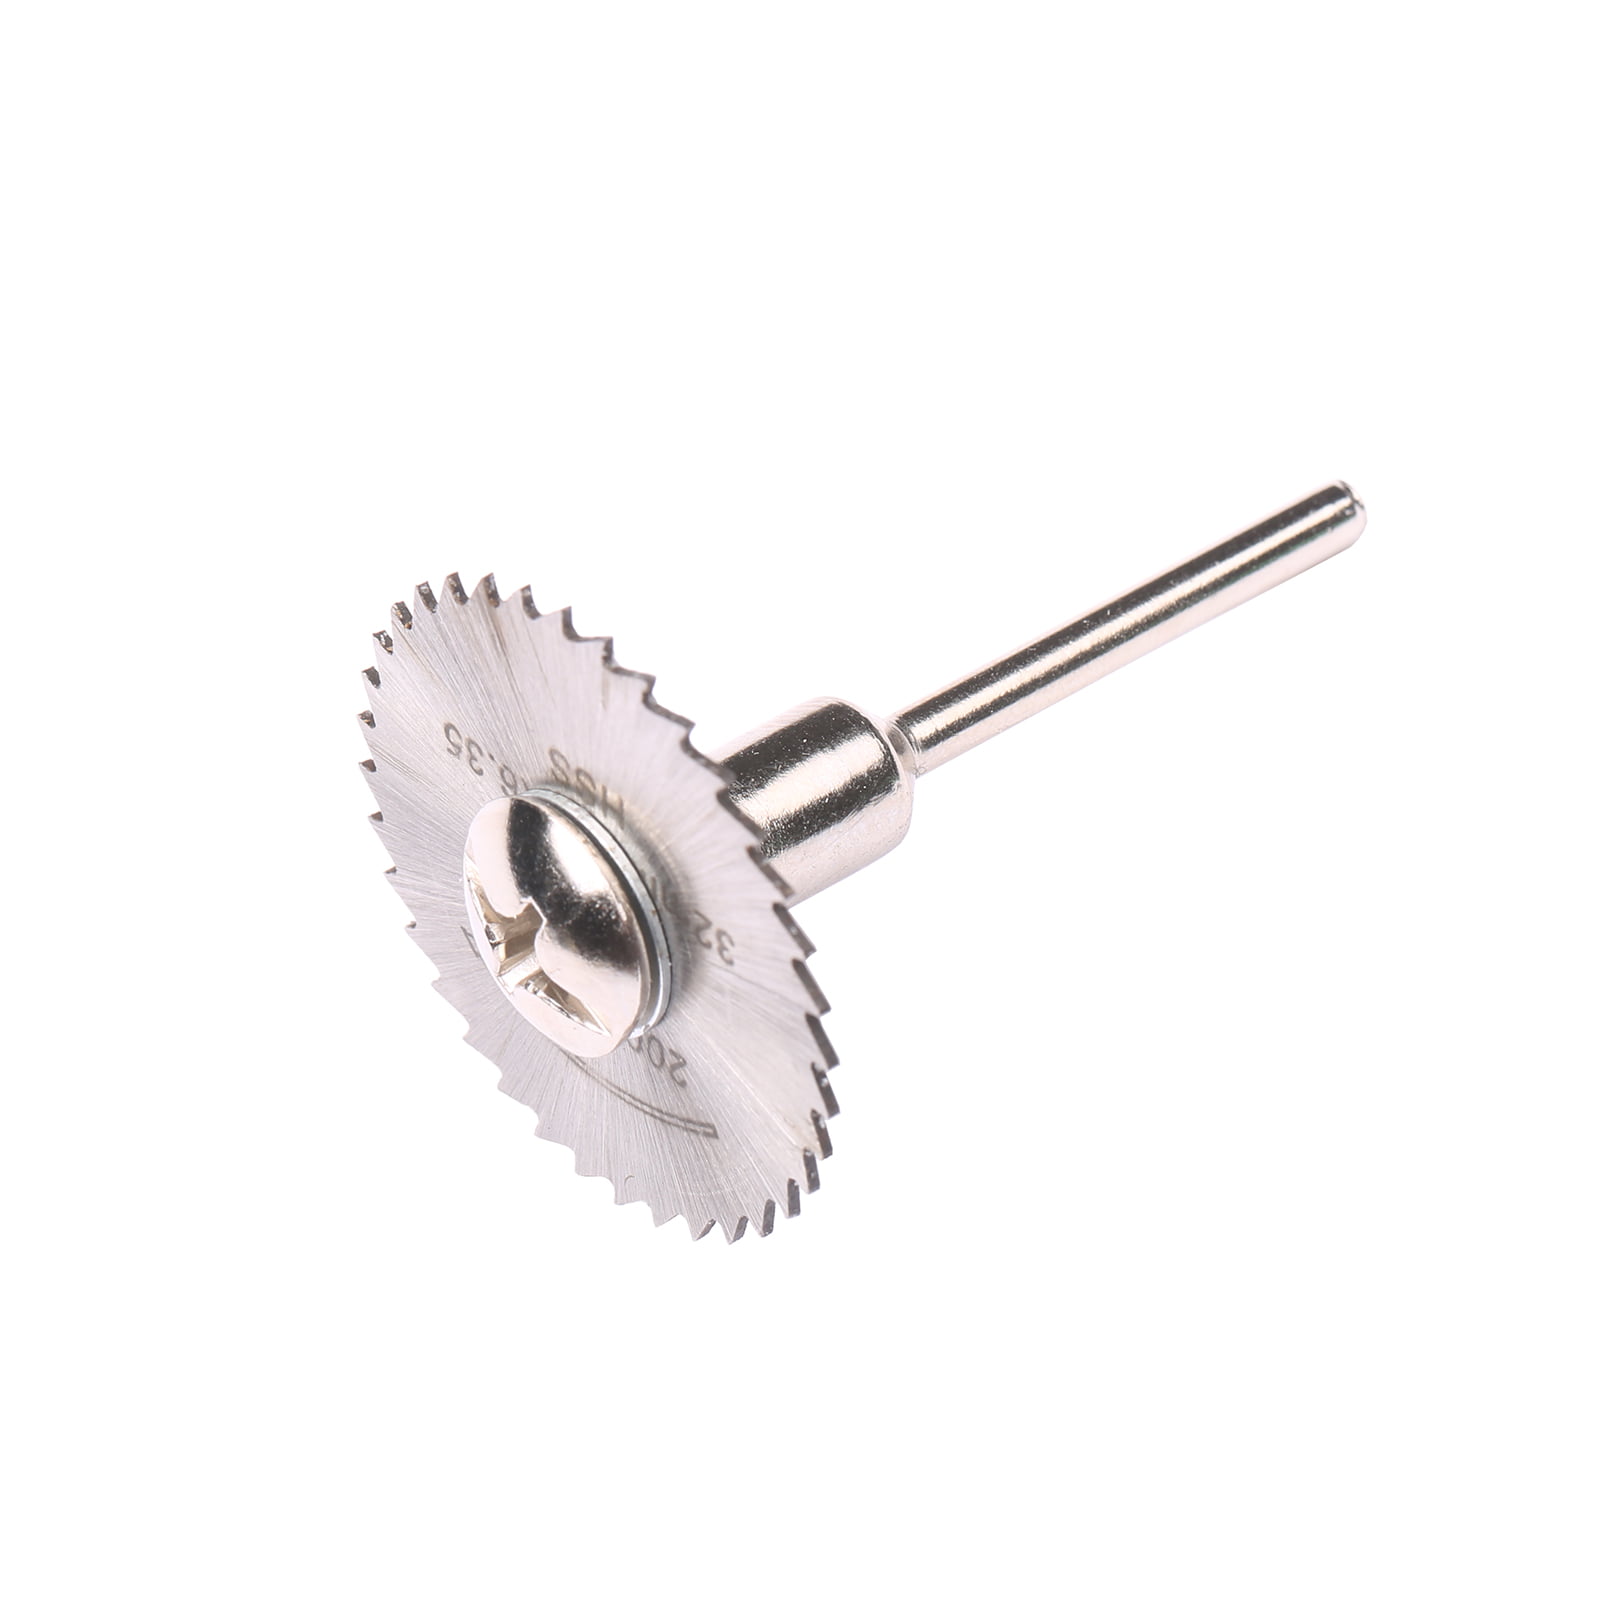 6pcs HSS Metal Circular Saw Disc Wheel Blades Cut off Dremel Drill Rotary Tool 